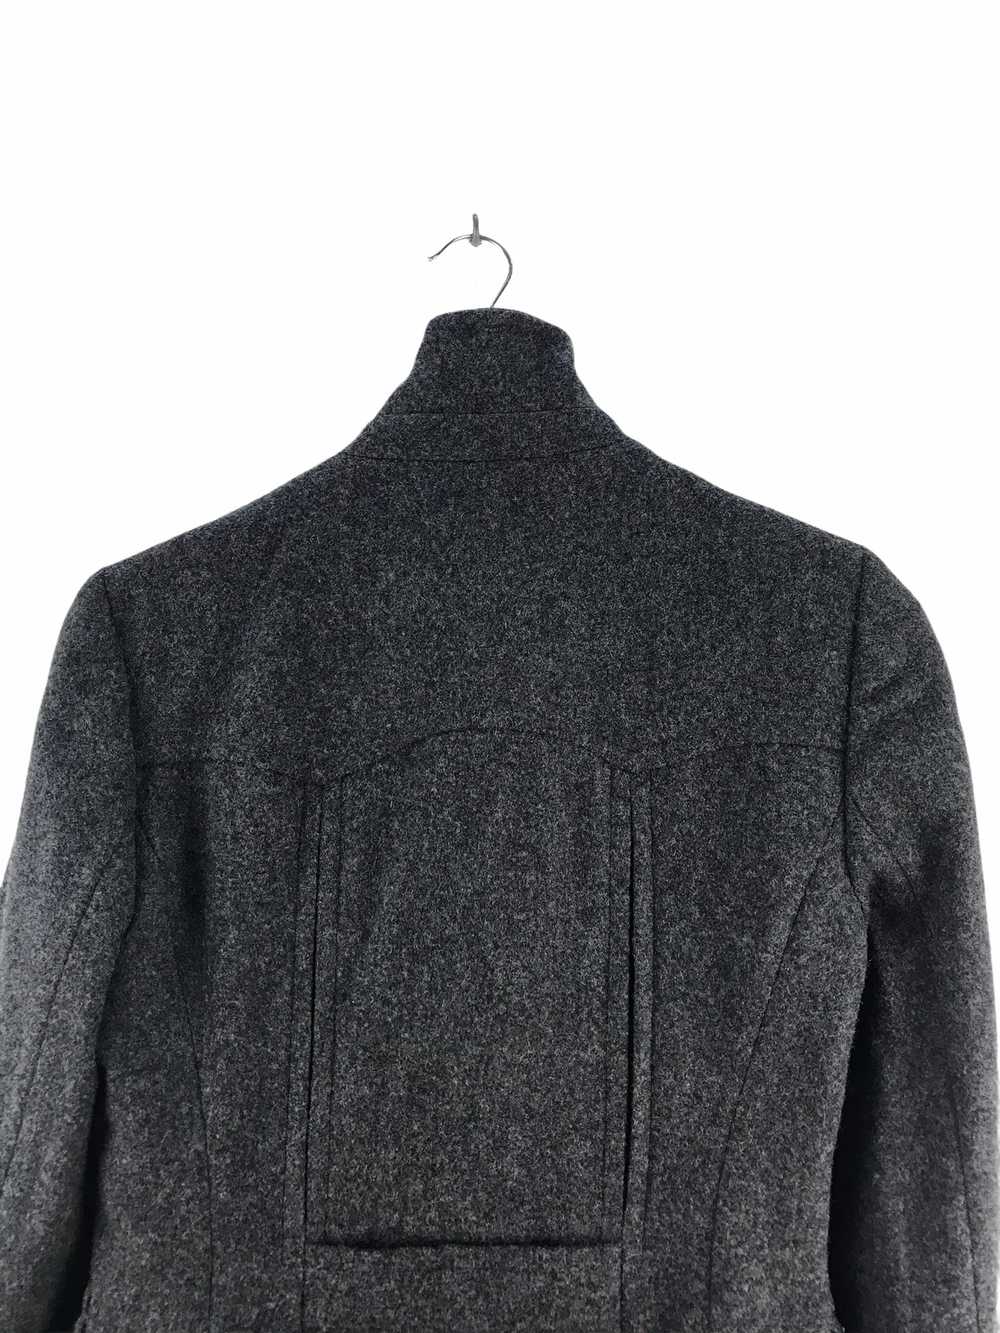 Burberry Blue Label Wool Jacket - image 5